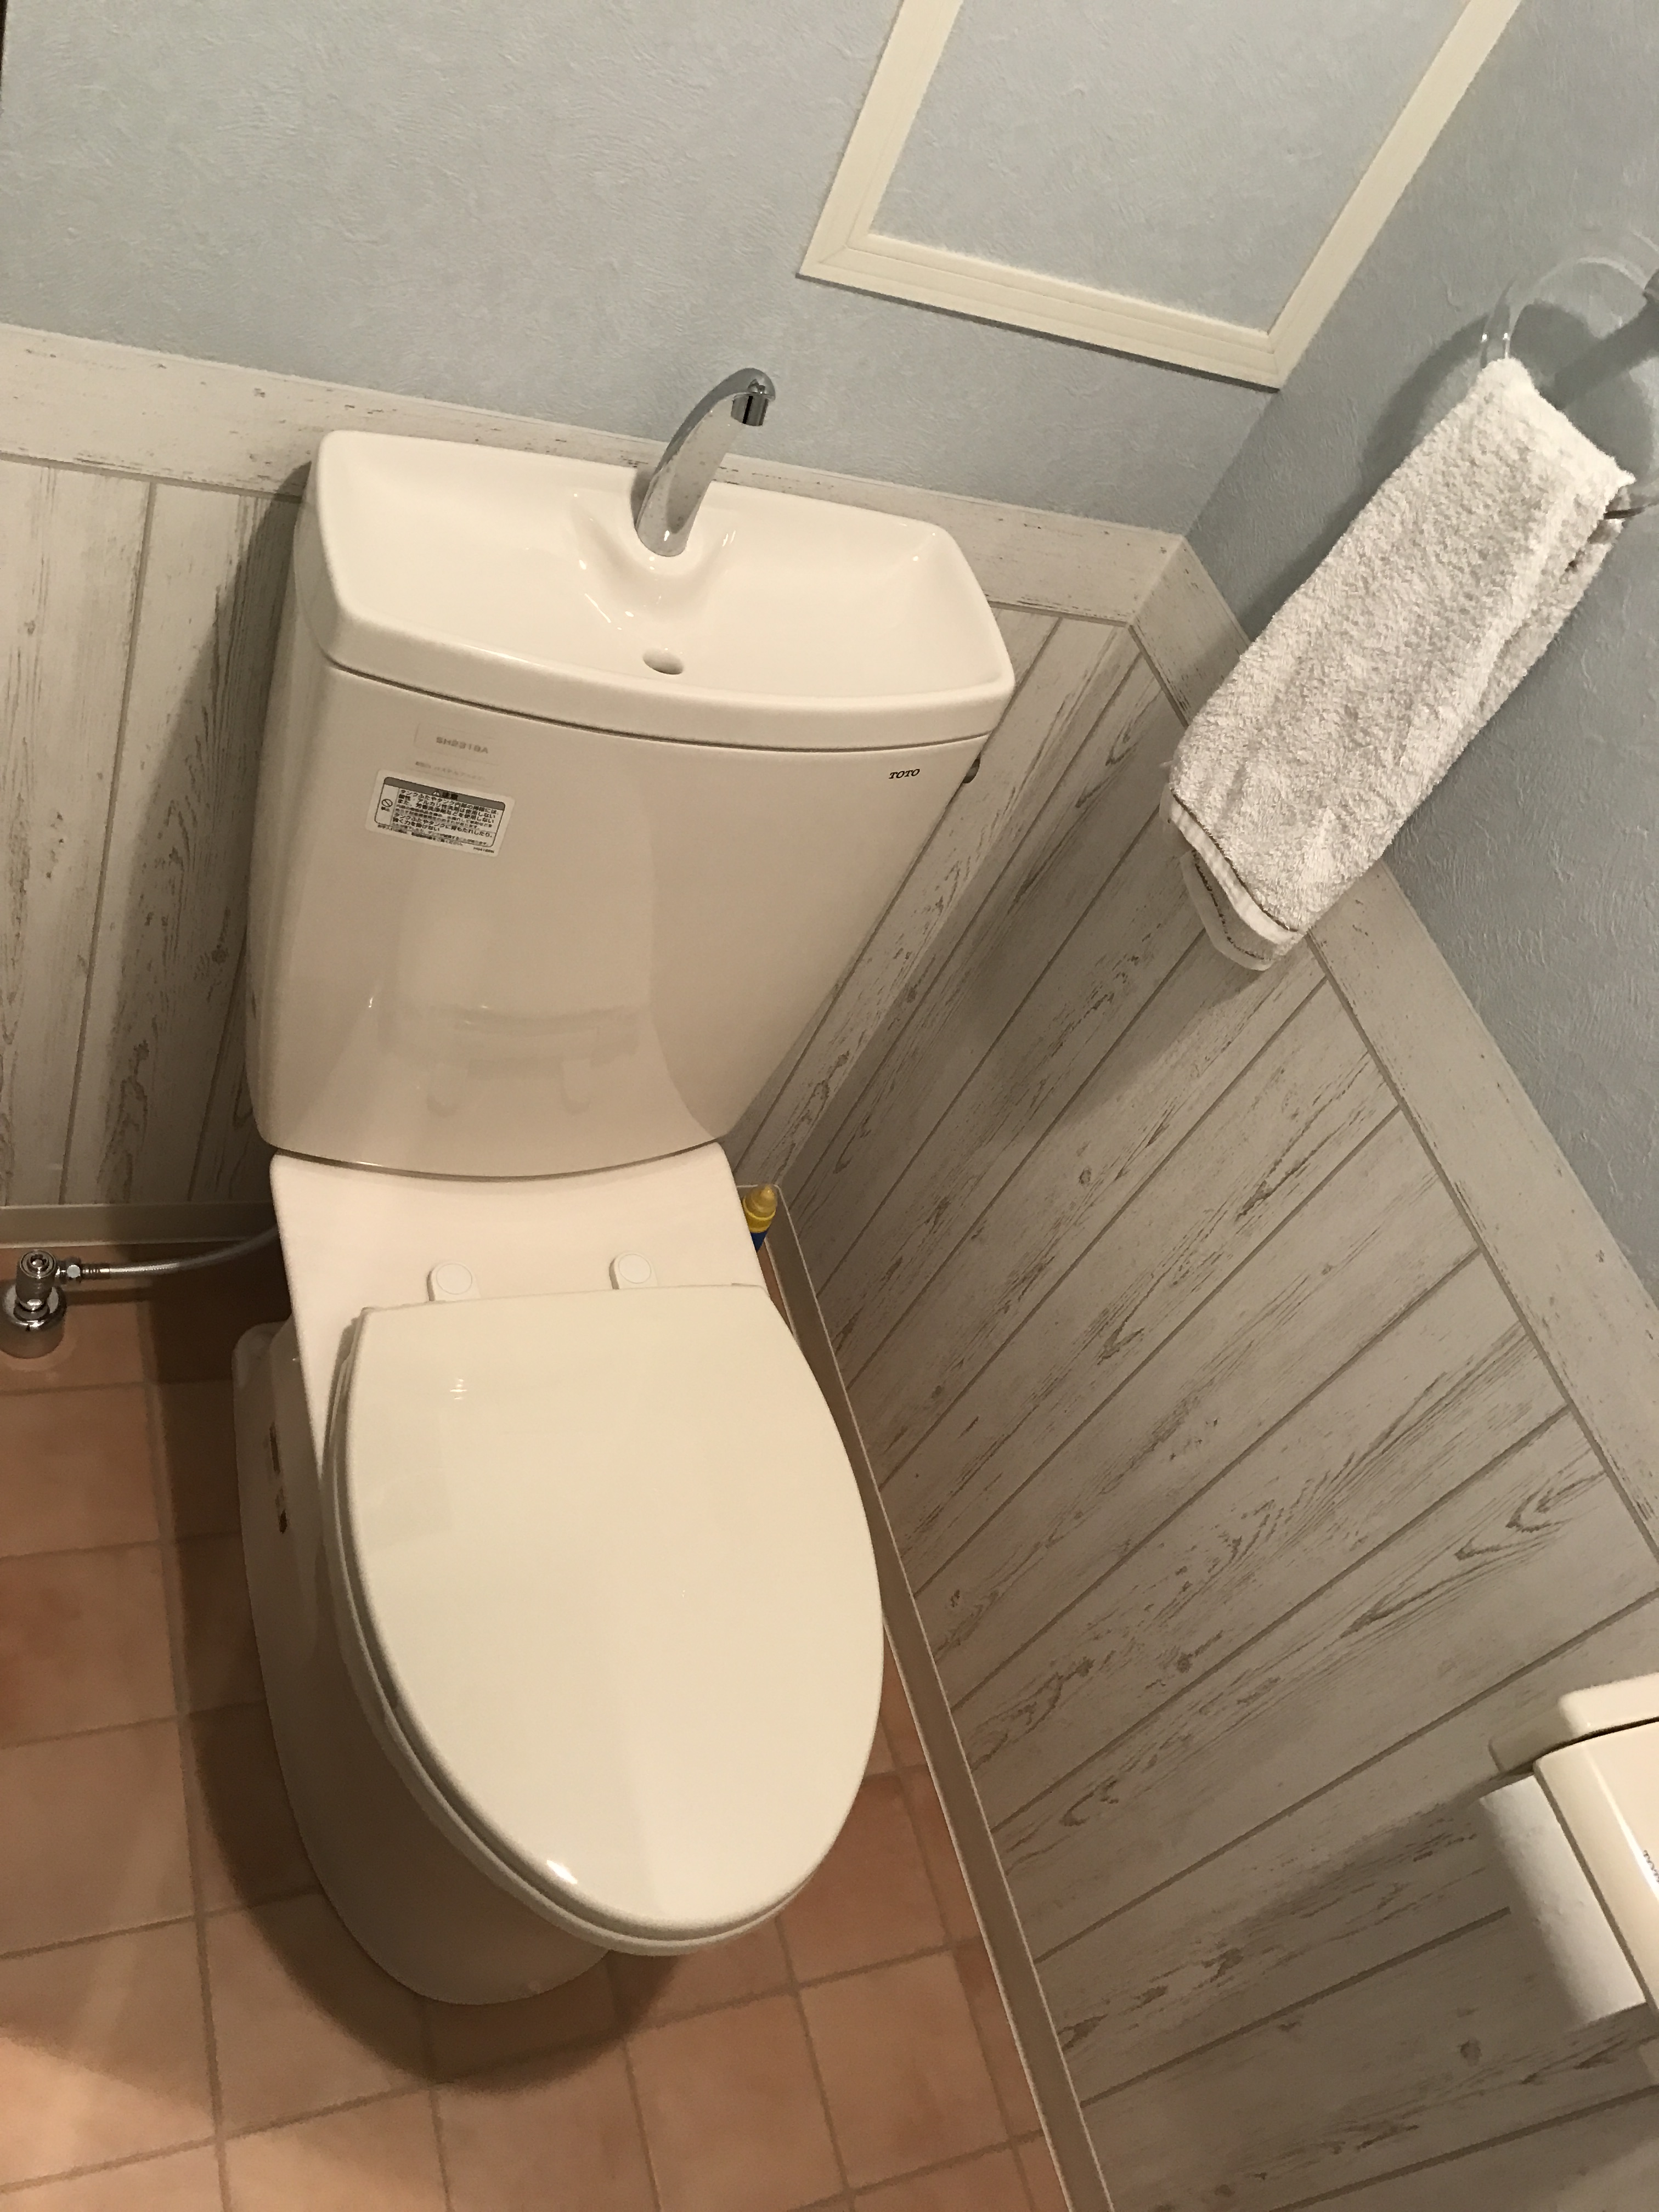 B 20 節水とデザインを重視したトイレ空間 尼崎市 ウェーブ西宮 西宮 宝塚 尼崎 伊丹 芦屋のリフォーム リノベーション